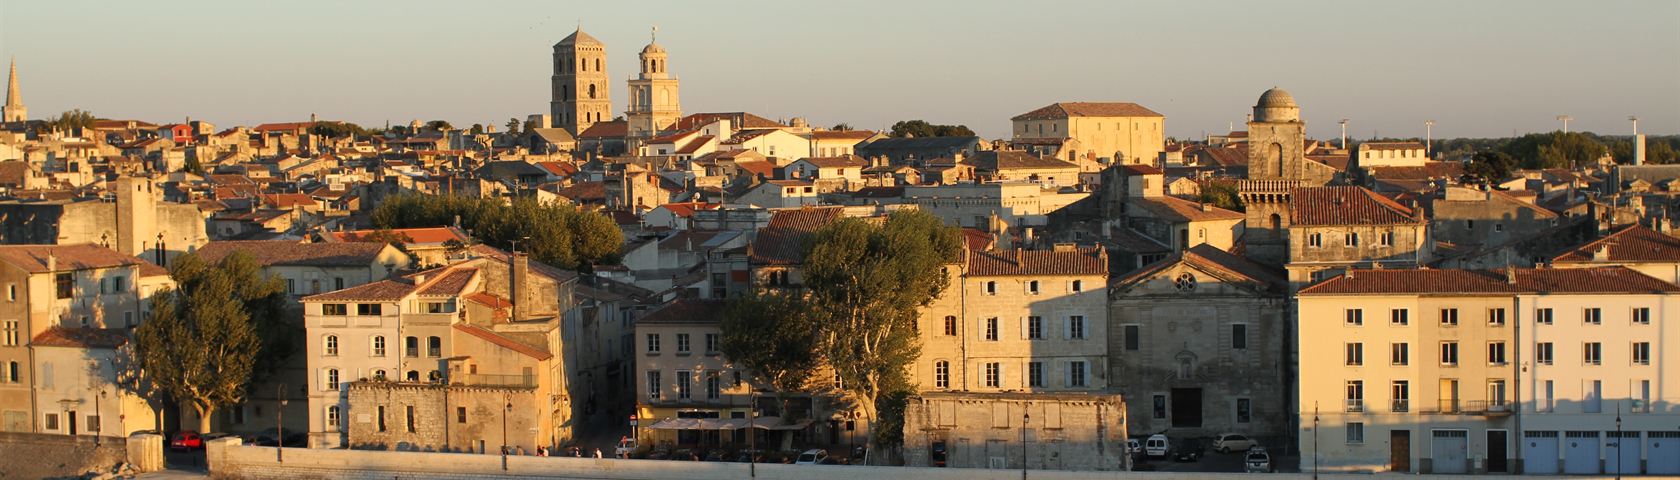 View of Arles